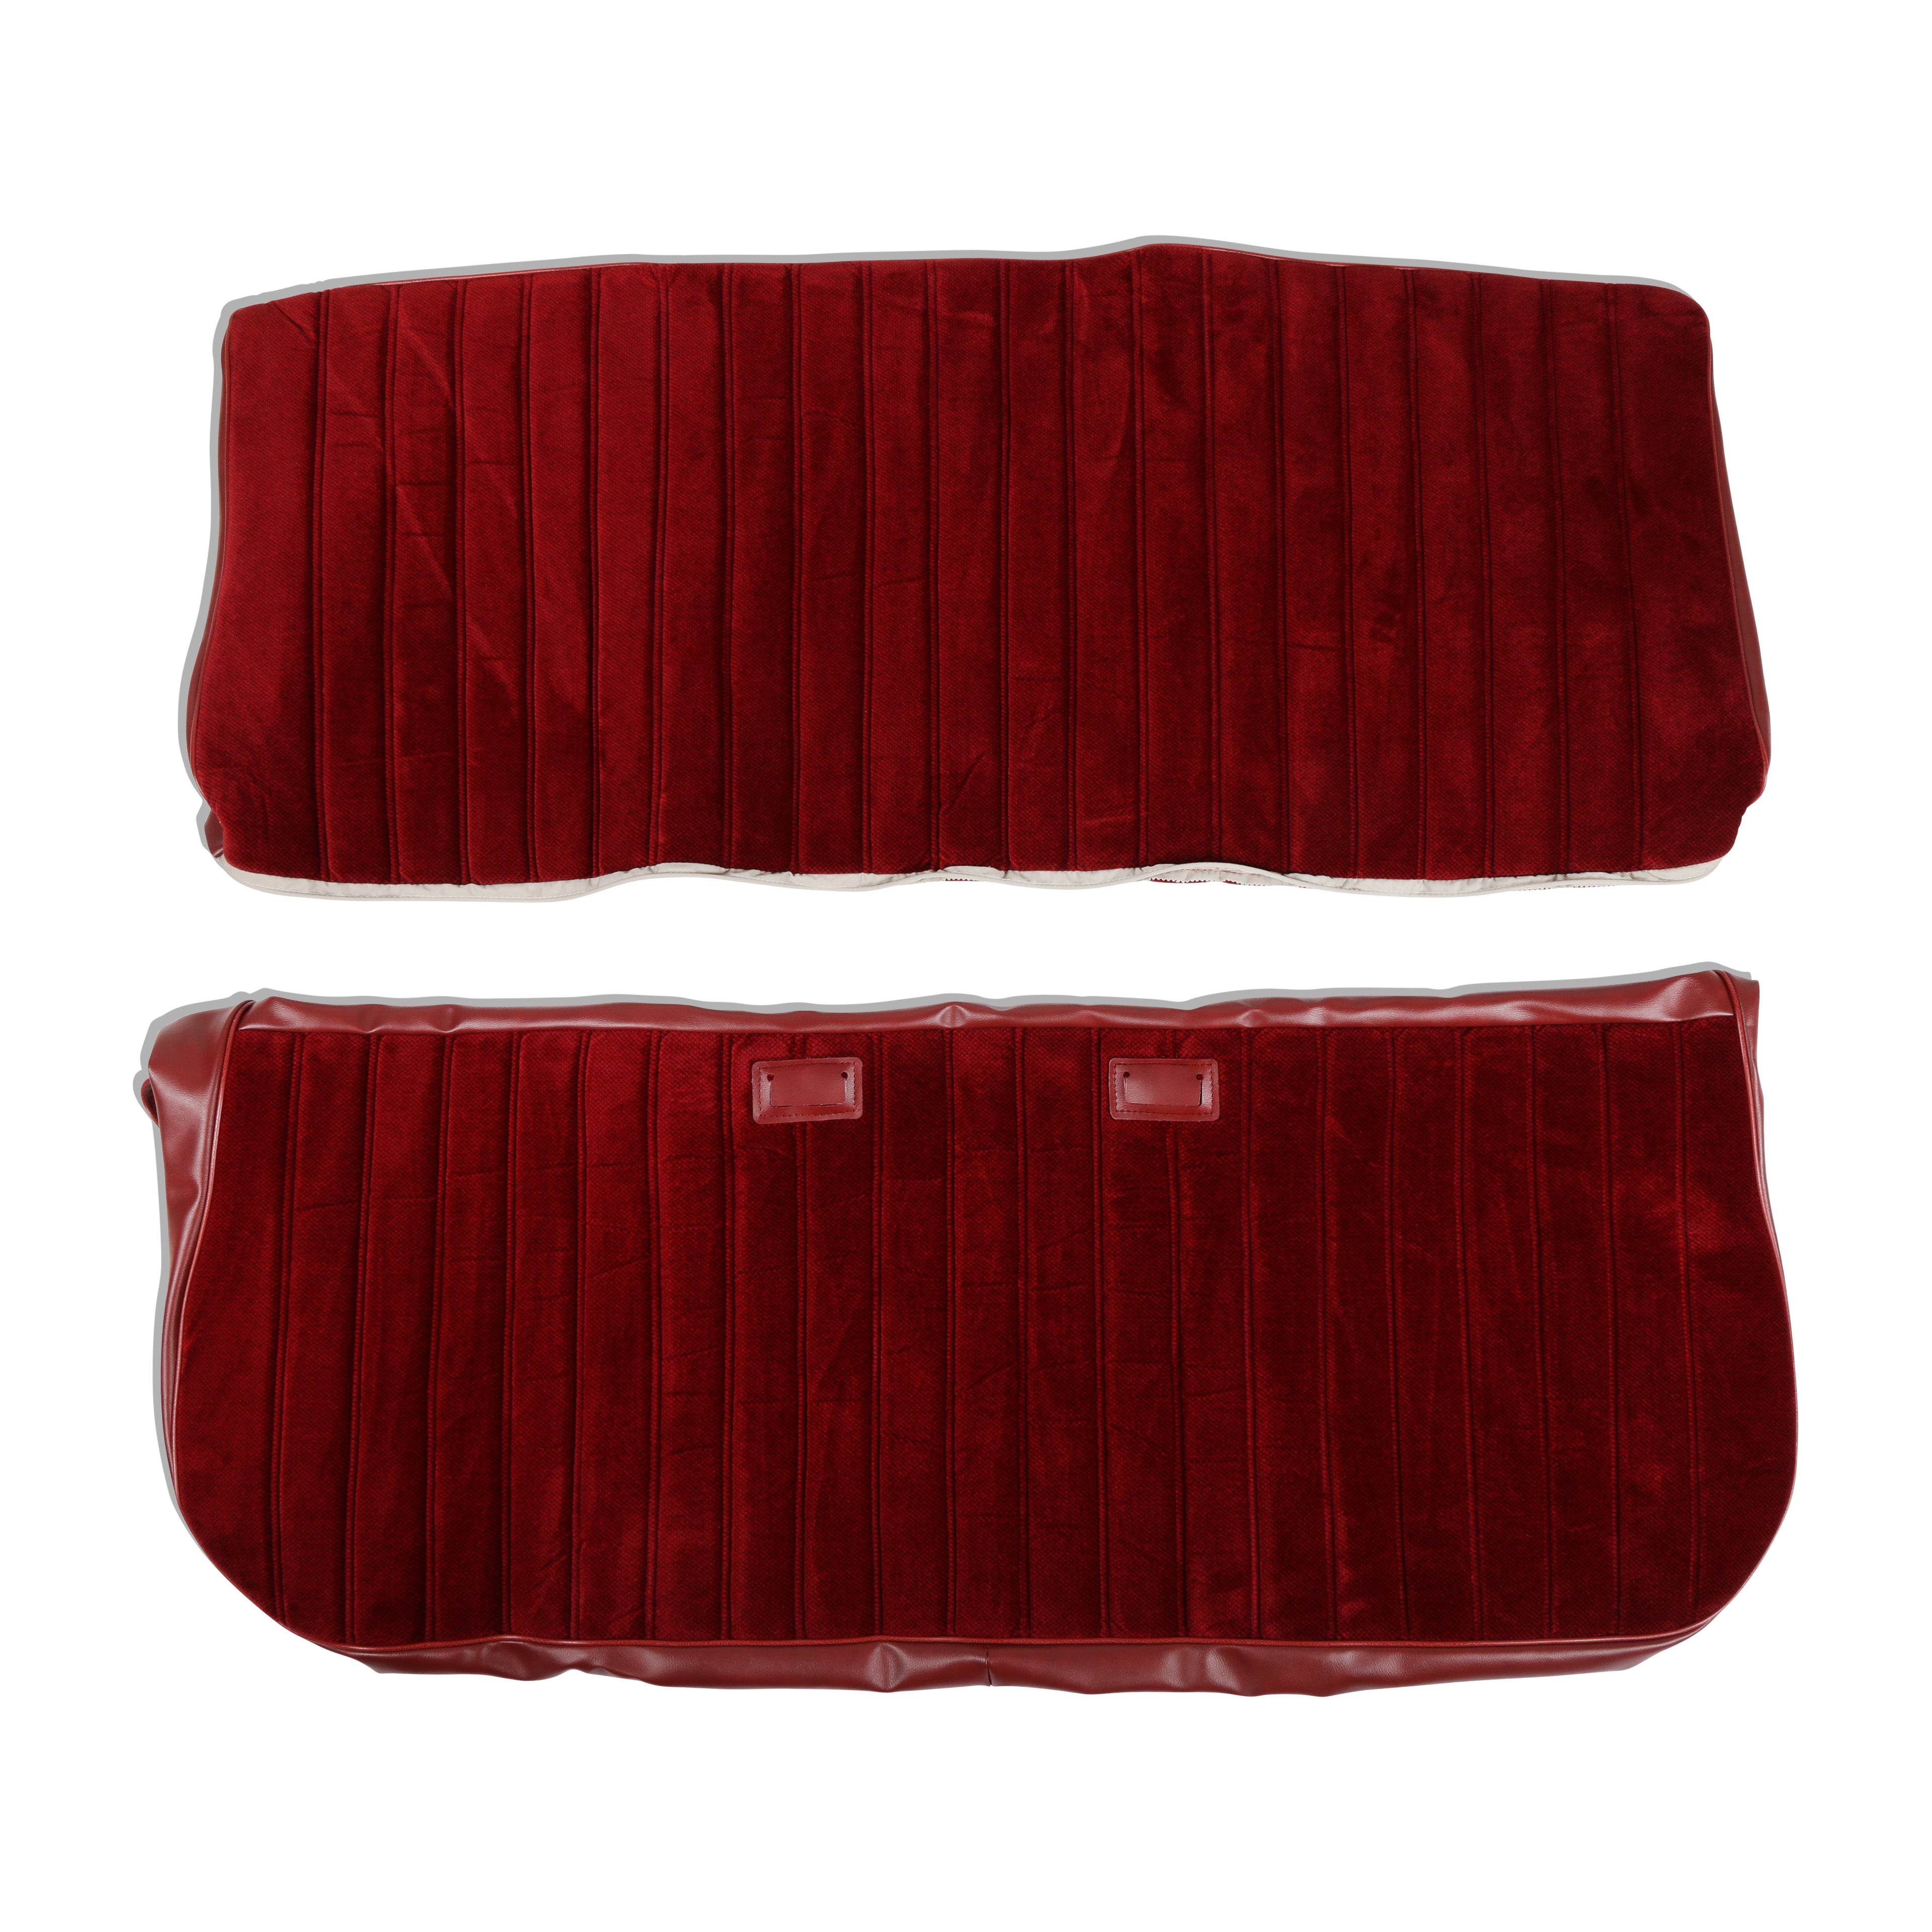 BROTHERS C/K Seat Upholstery Kit - Full Pleat Cloth/Vinyl - Maroon/Burgundy pn 05-296